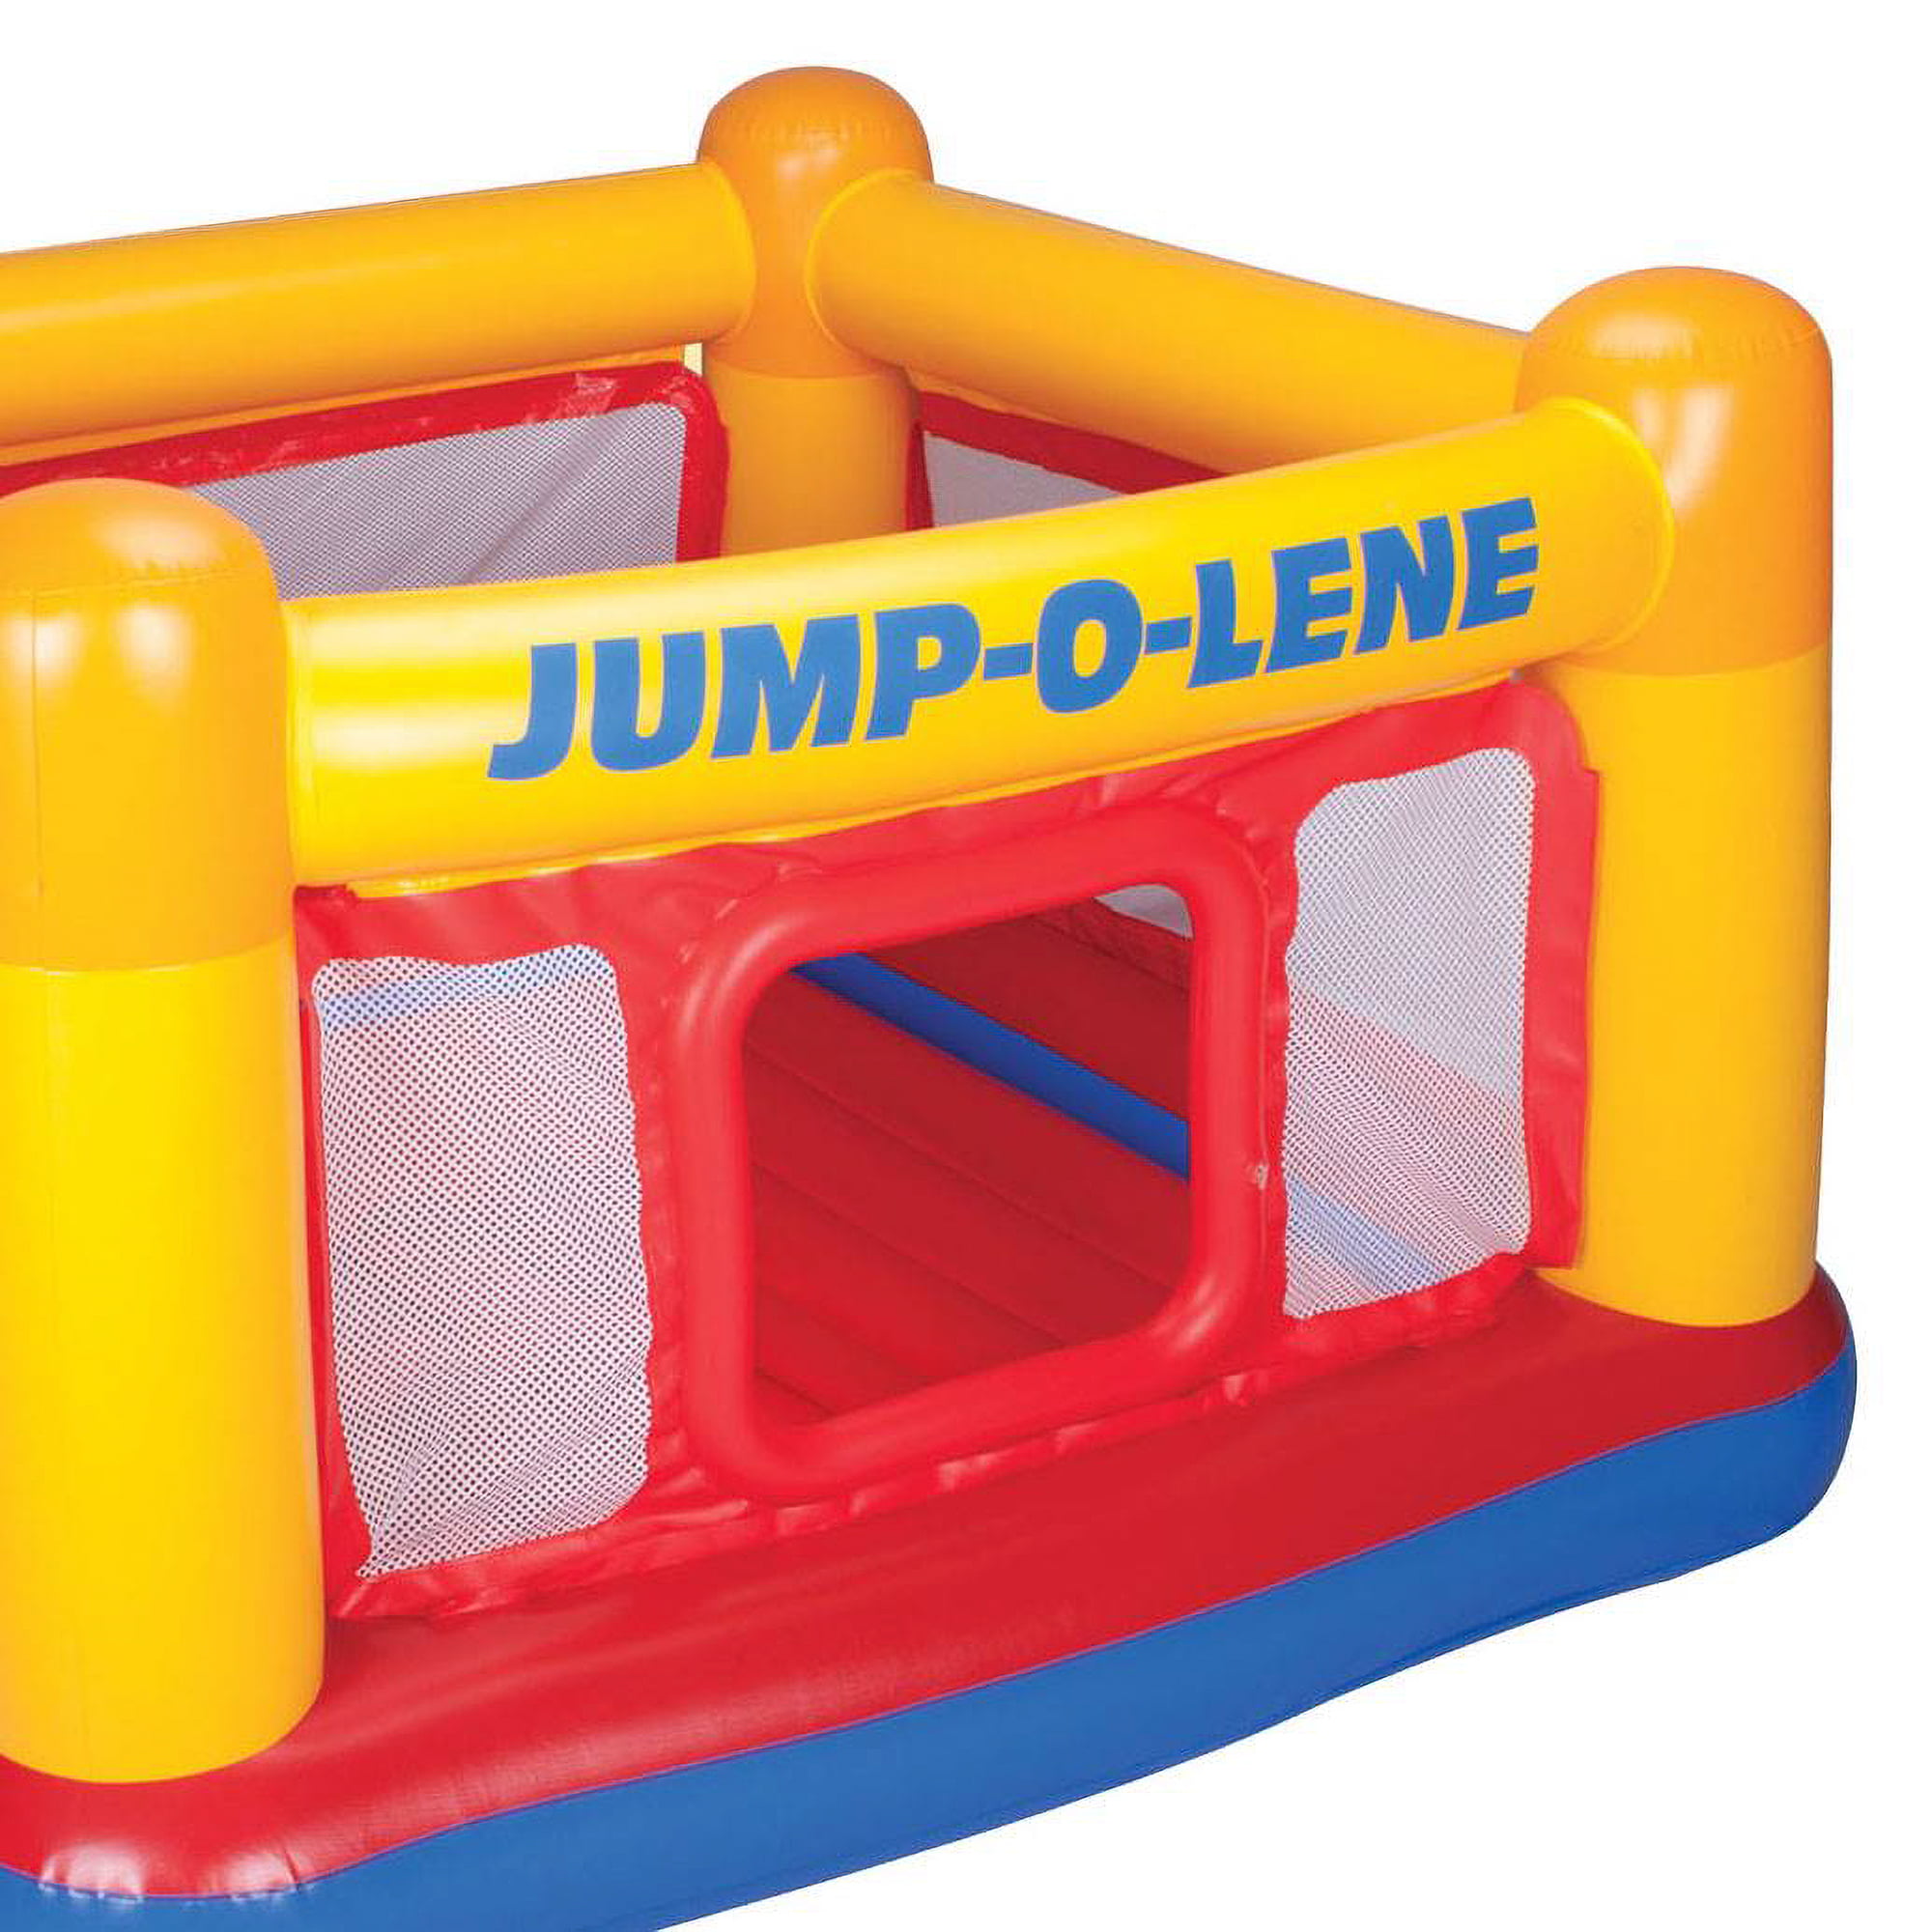 Intex 48259EP Jump O Lene Castle Bouncer for sale online 